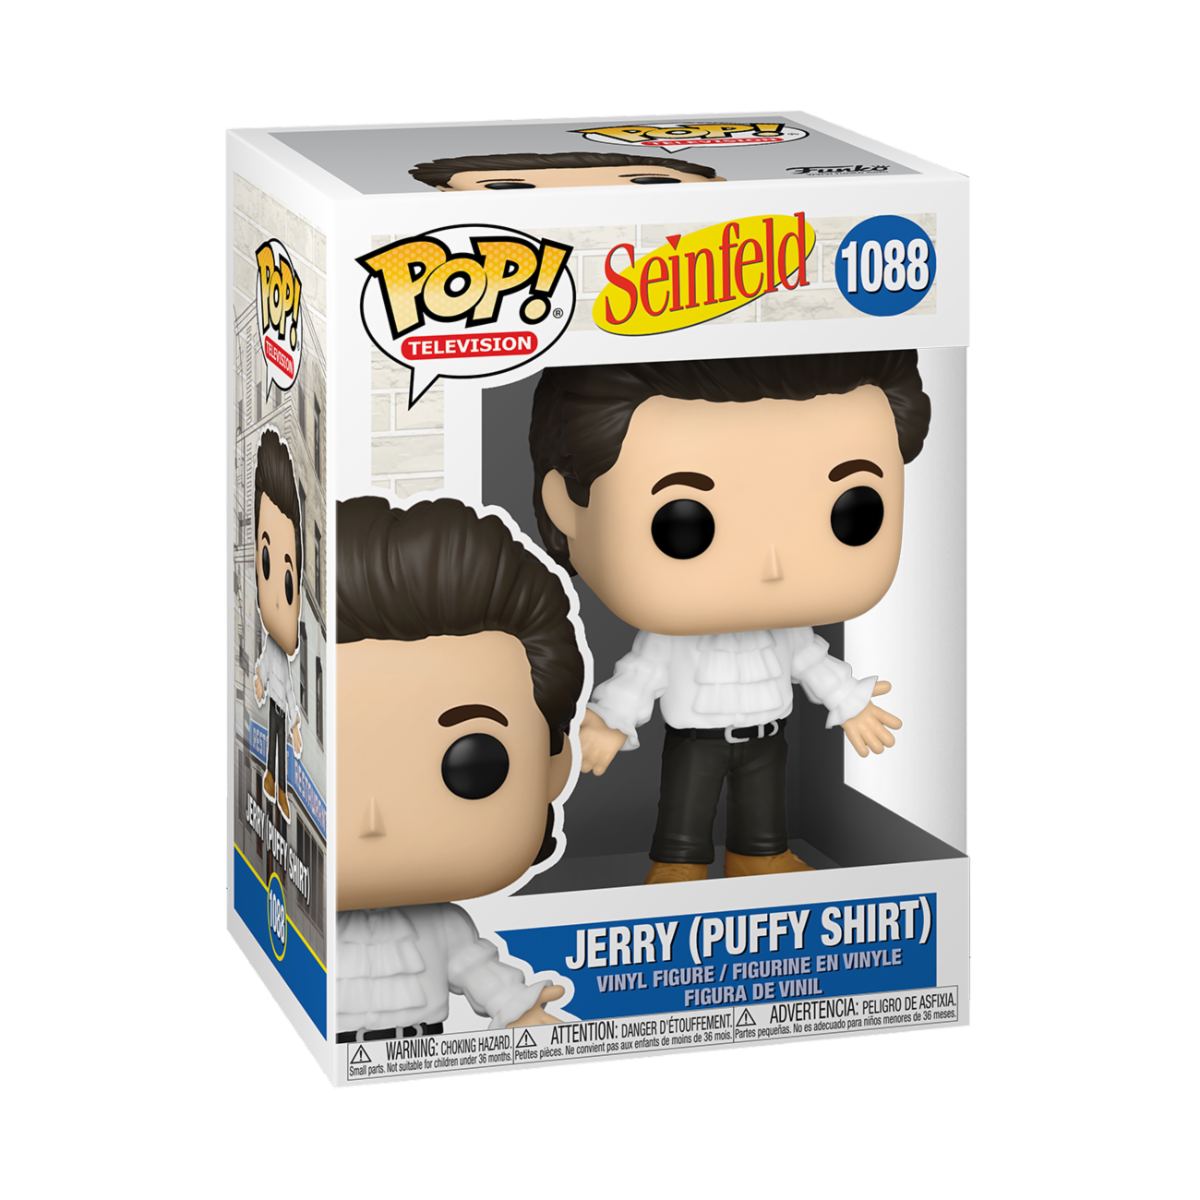 Jerry (Puffy Shirt) #1088 Funko Pop! Seinfeld